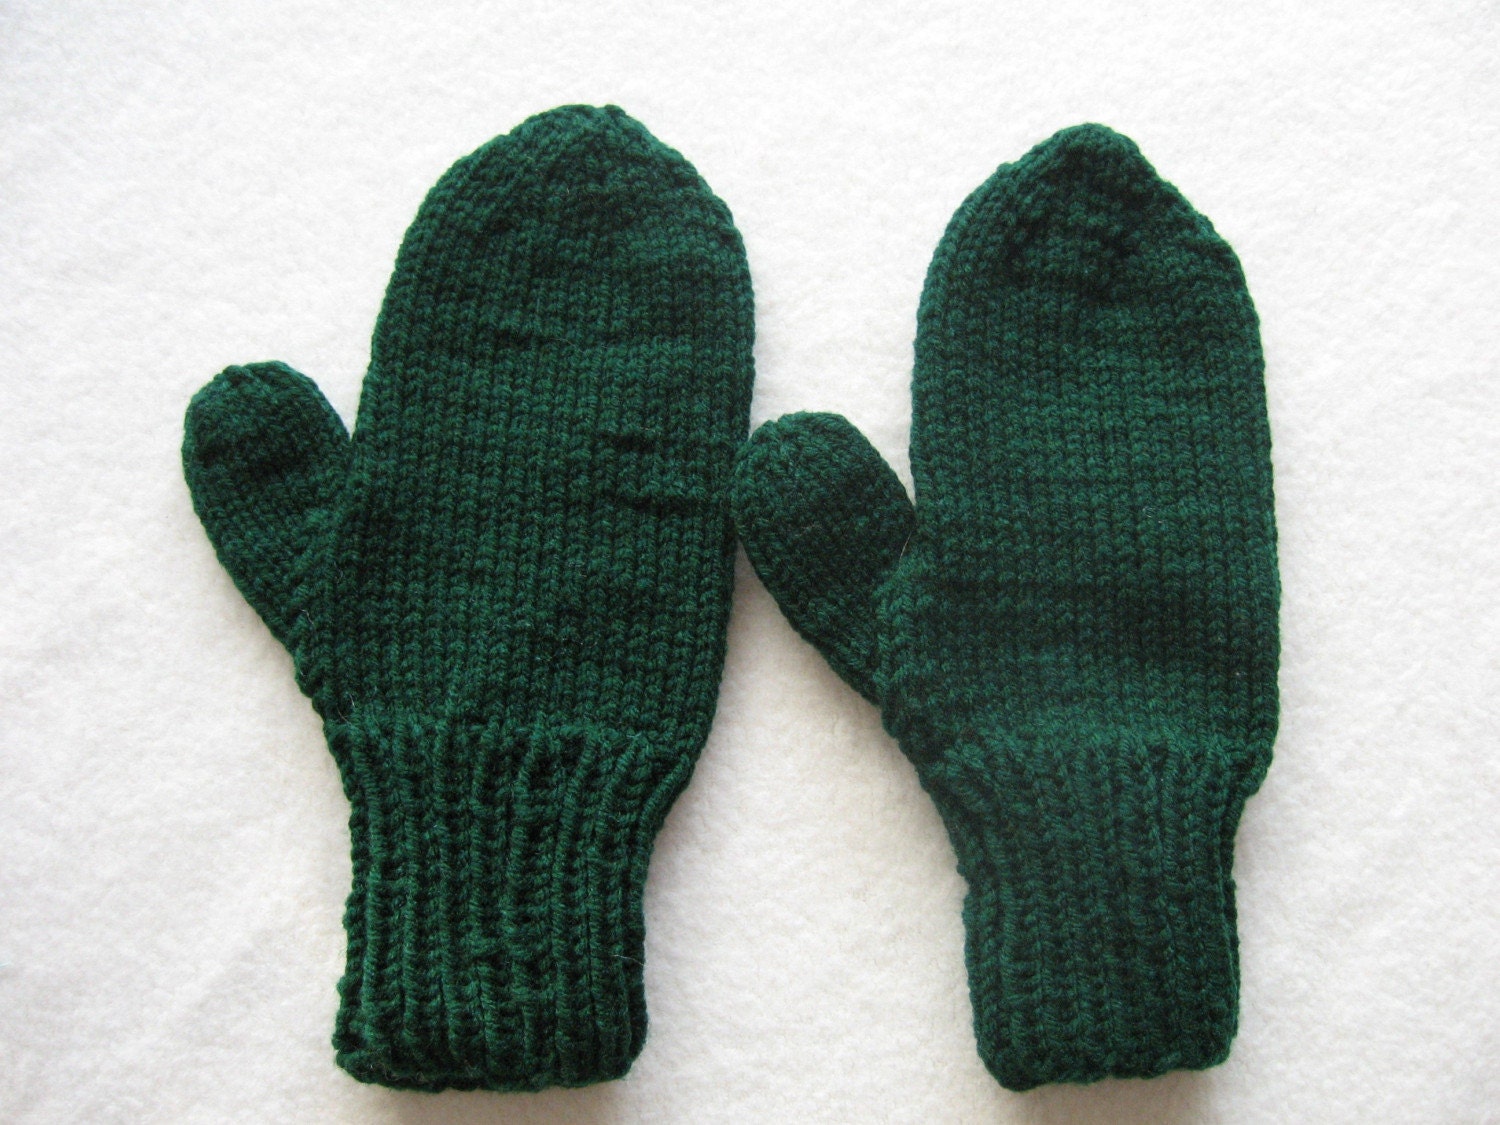 crochet mittens, patterns free, easy crochet mittens, crochet